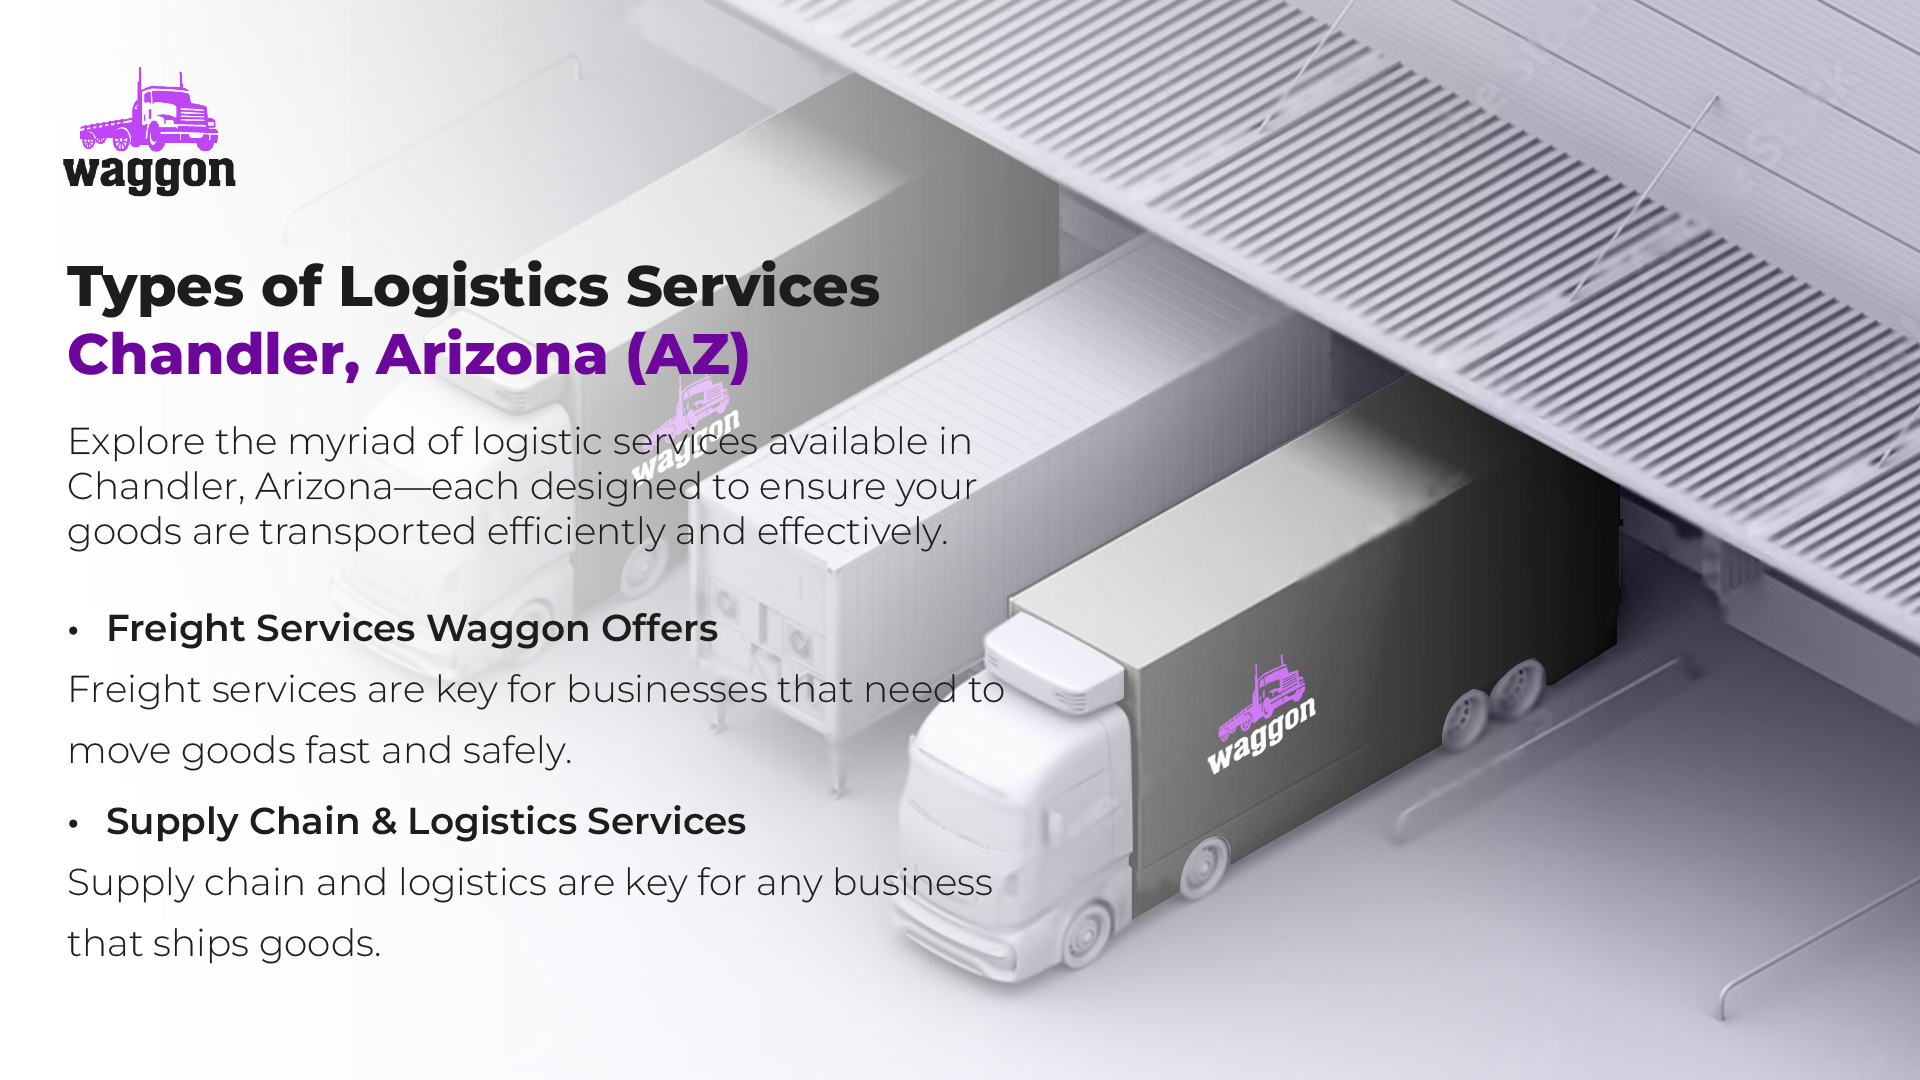 Types of Logistics Services in Chandler, Arizona (AZ)